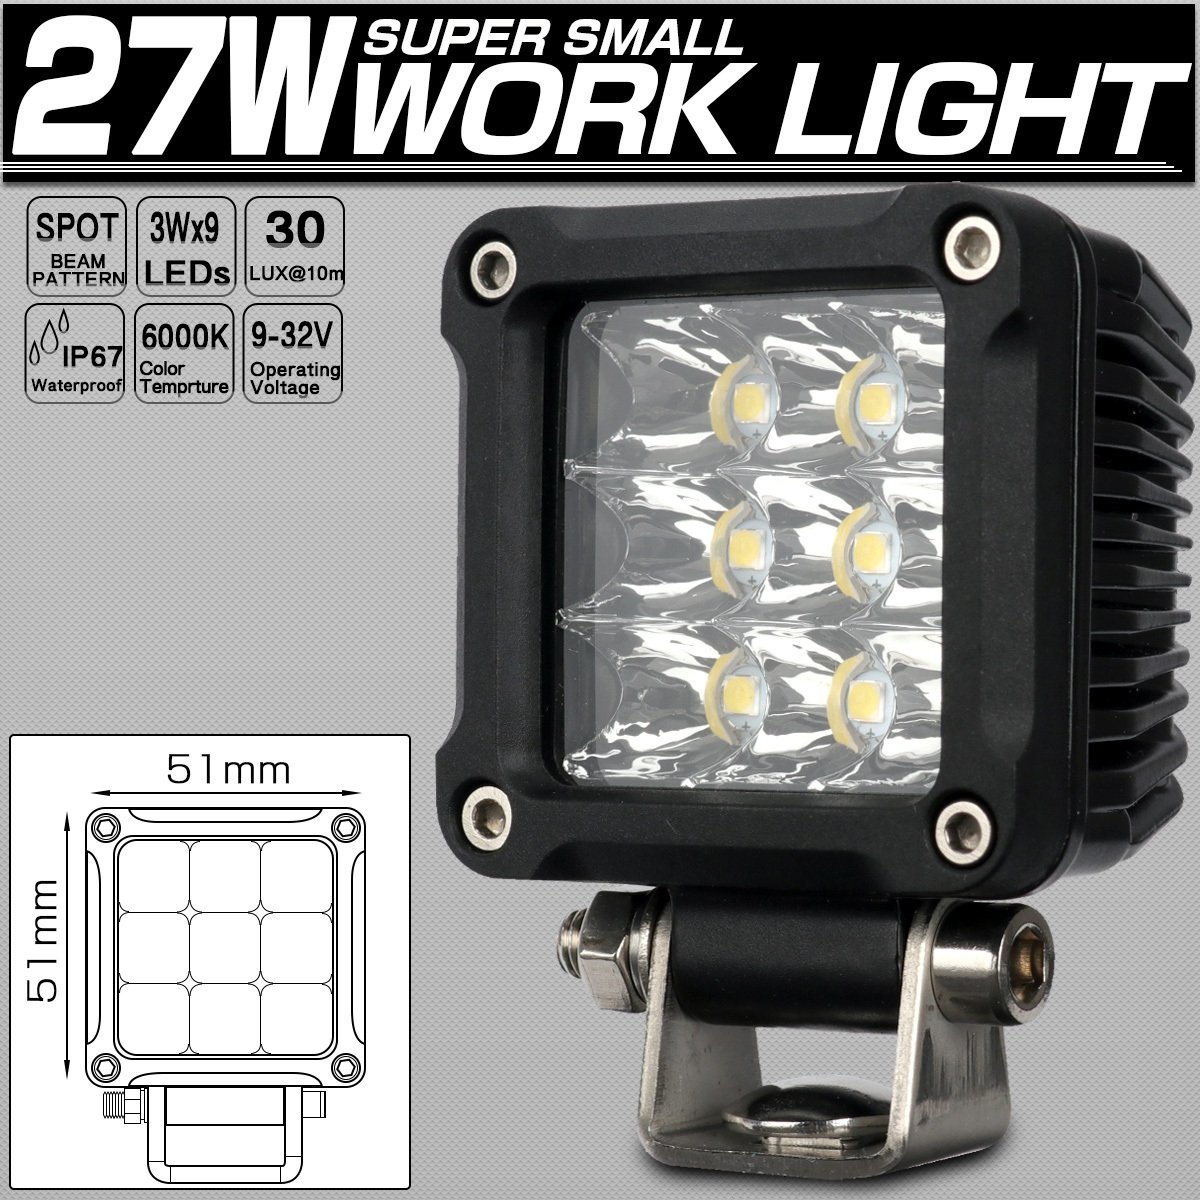 LED 作業灯 27W 超小型 軽量モデル ワークライト バックランプ フォグランプ 各種 補助灯に 防水IP67 12V/24V P-537_画像1